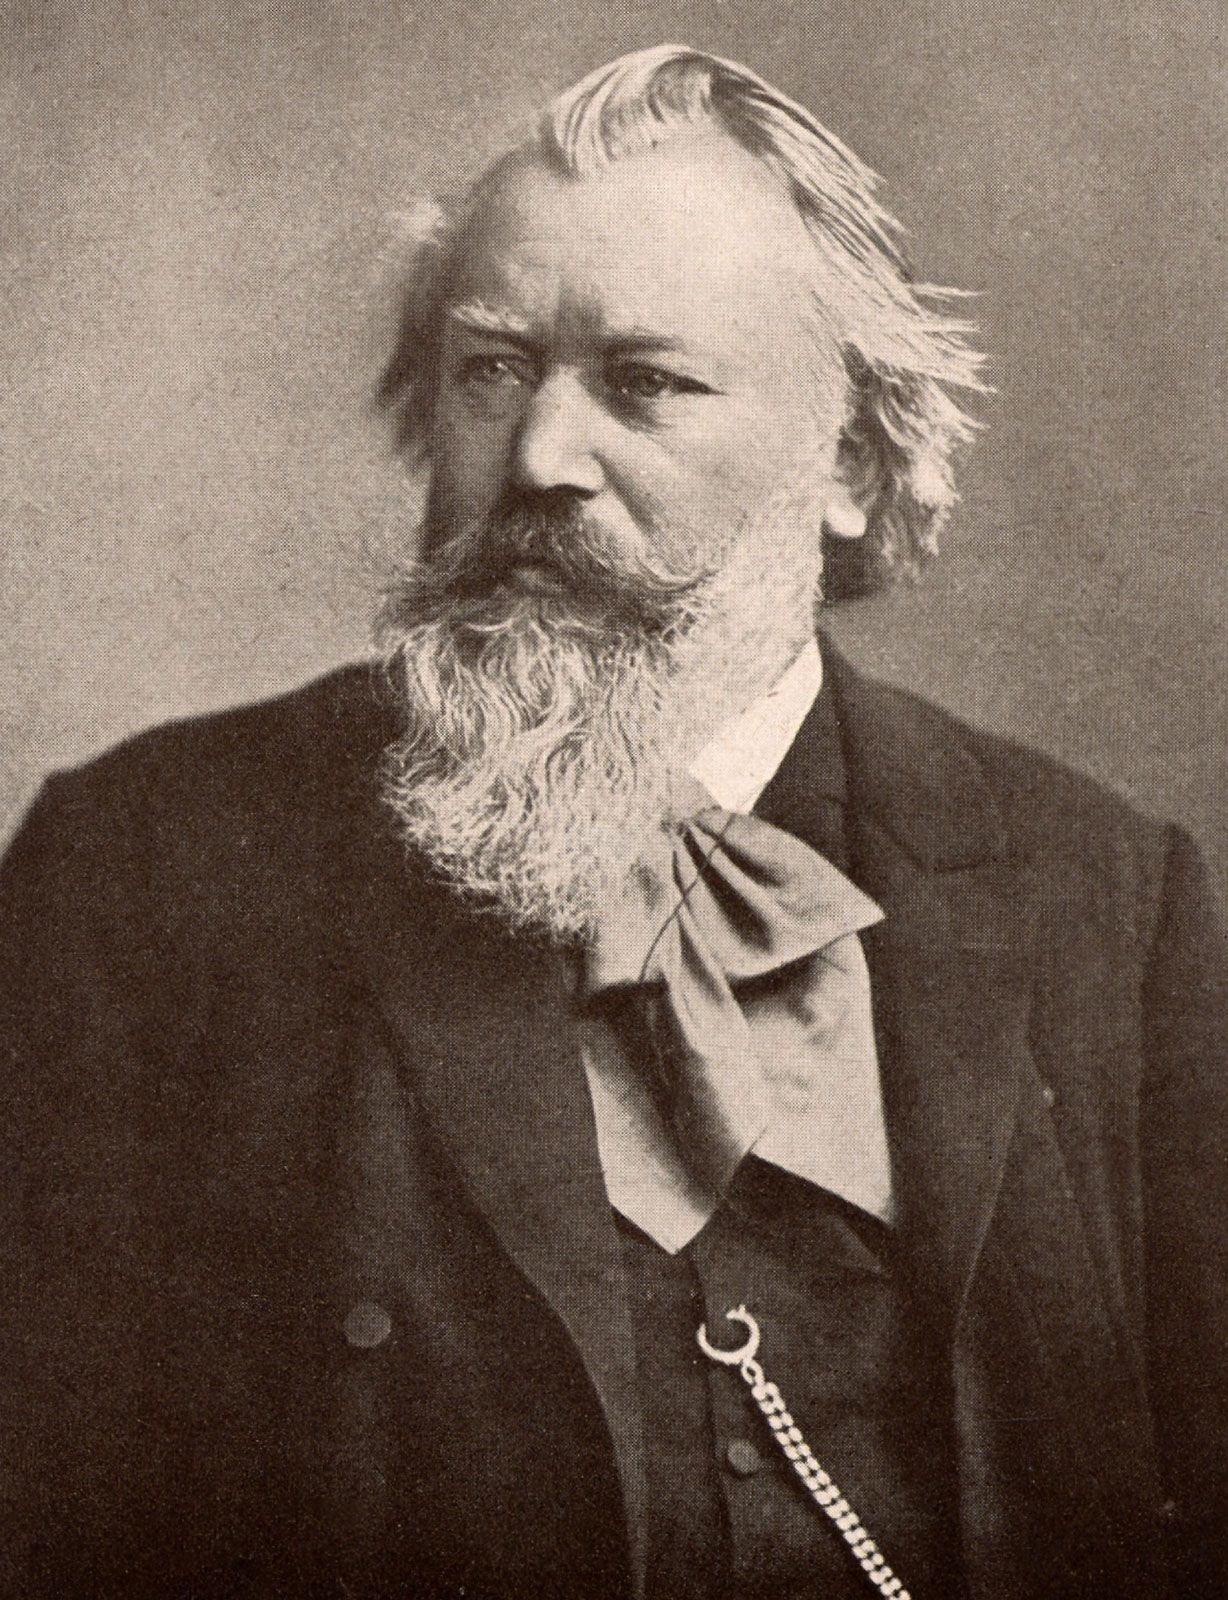  Biografía de Johannes Brahms